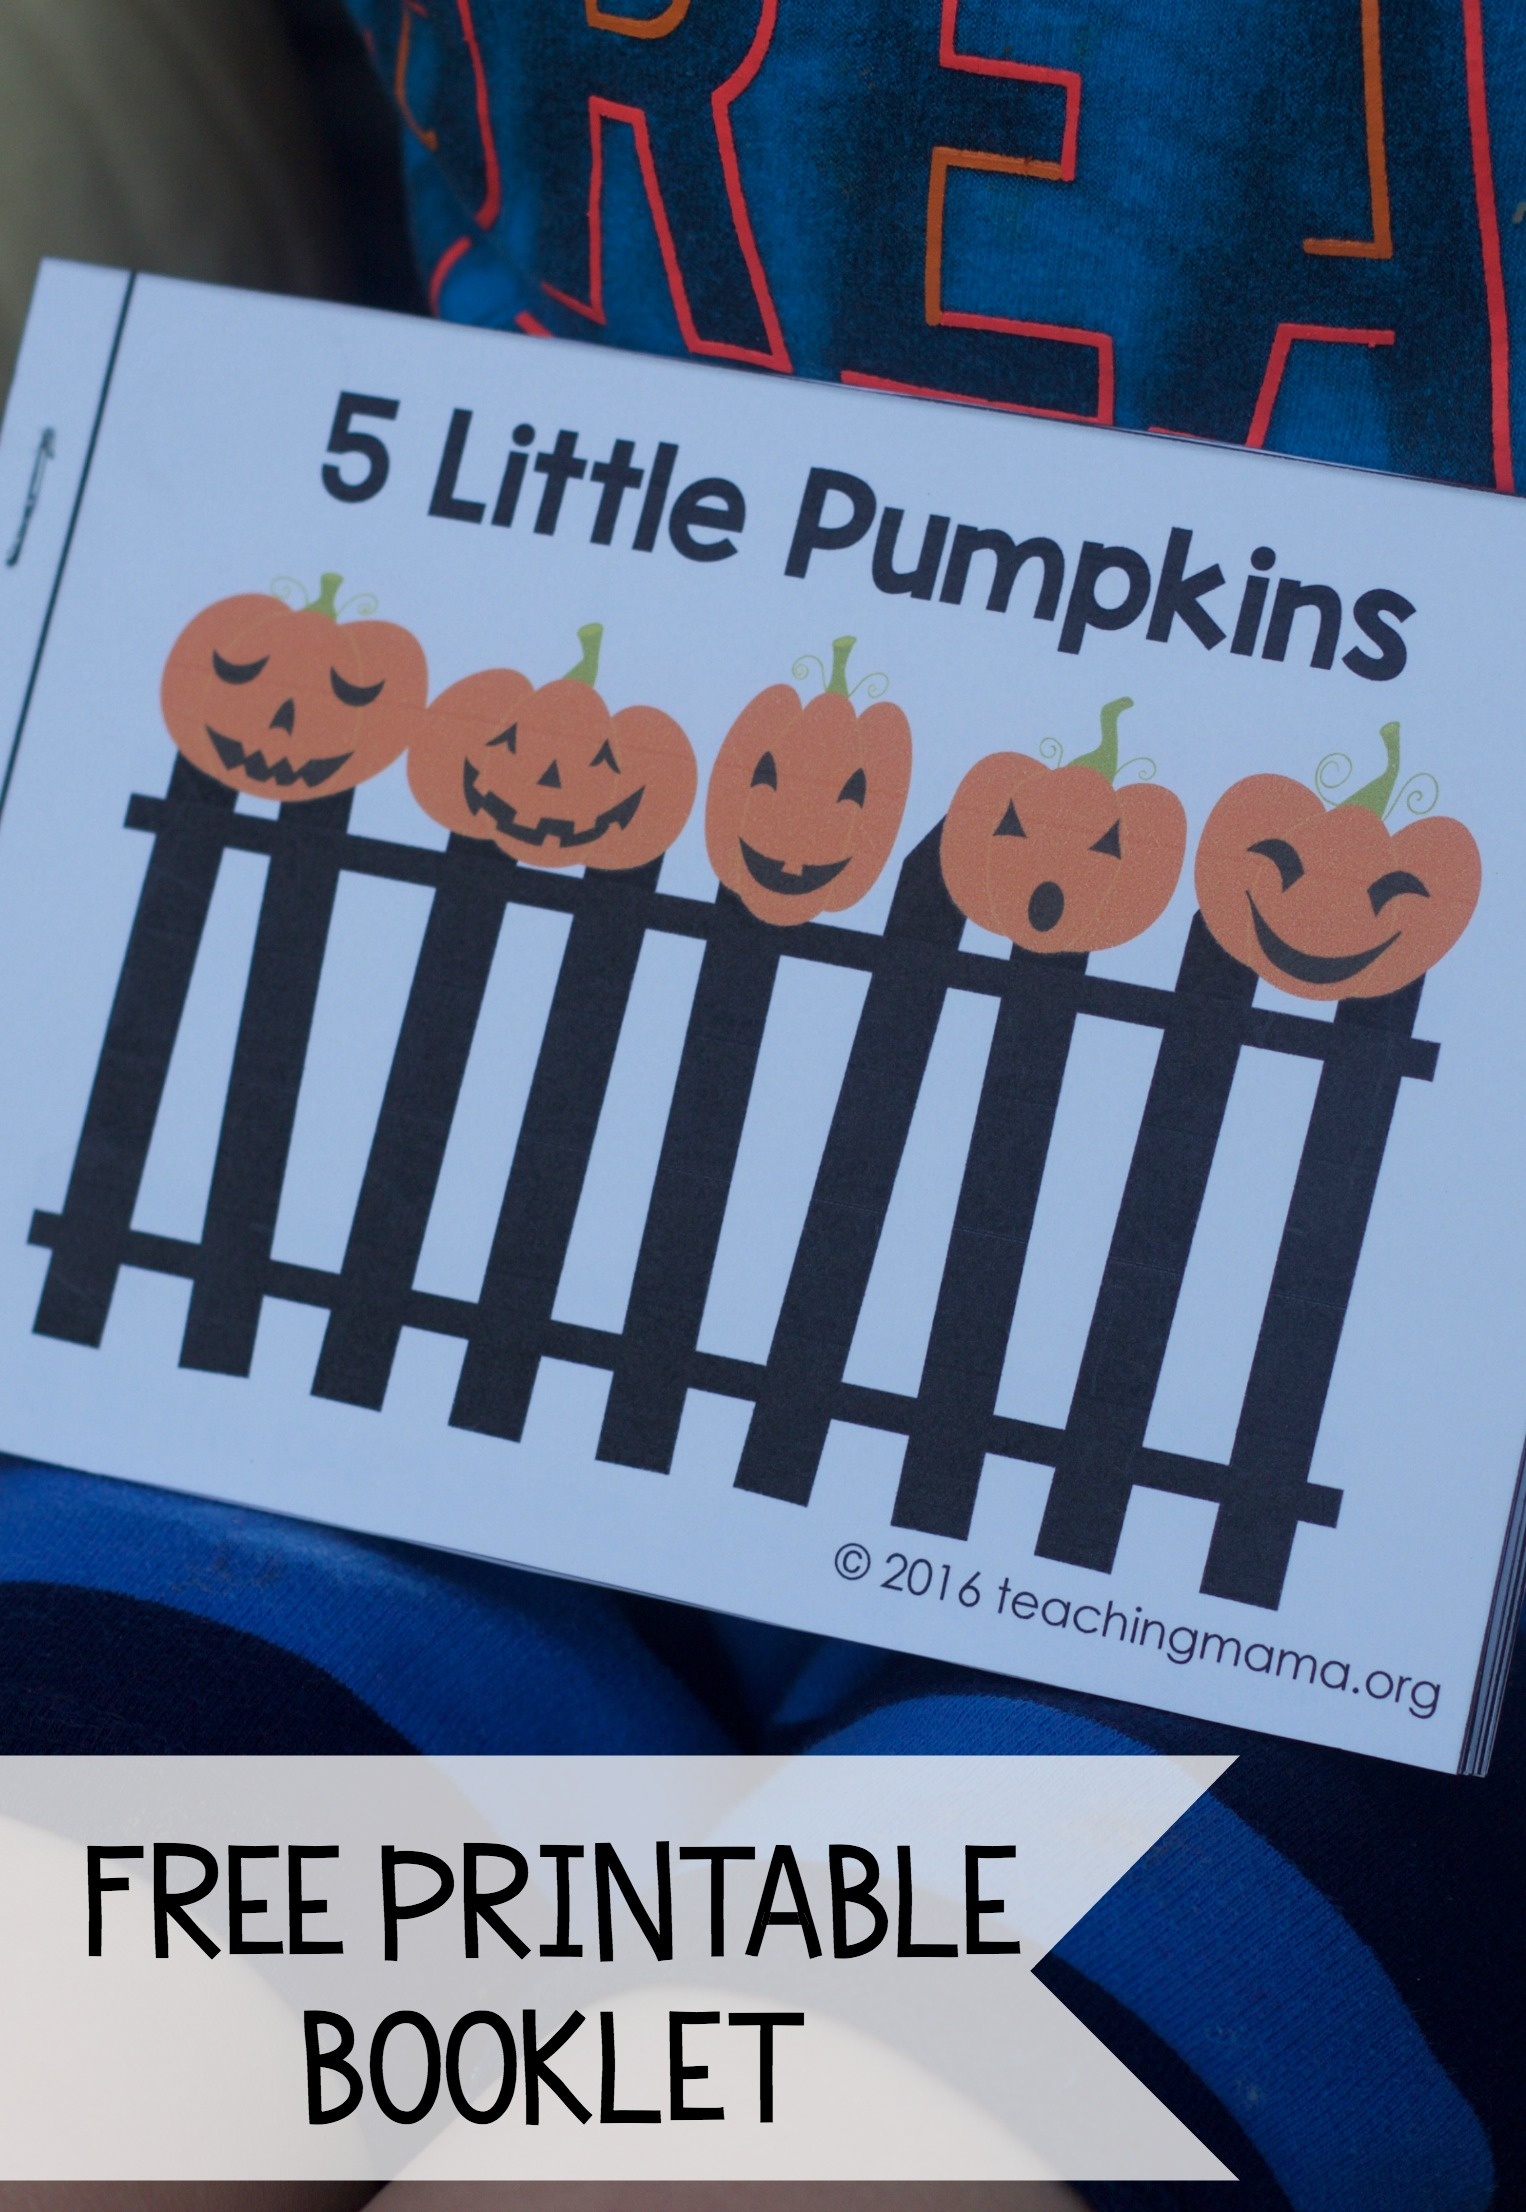 Five Little Pumpkins - Free Rhyme Booklet - Free Printable Pumpkin Books